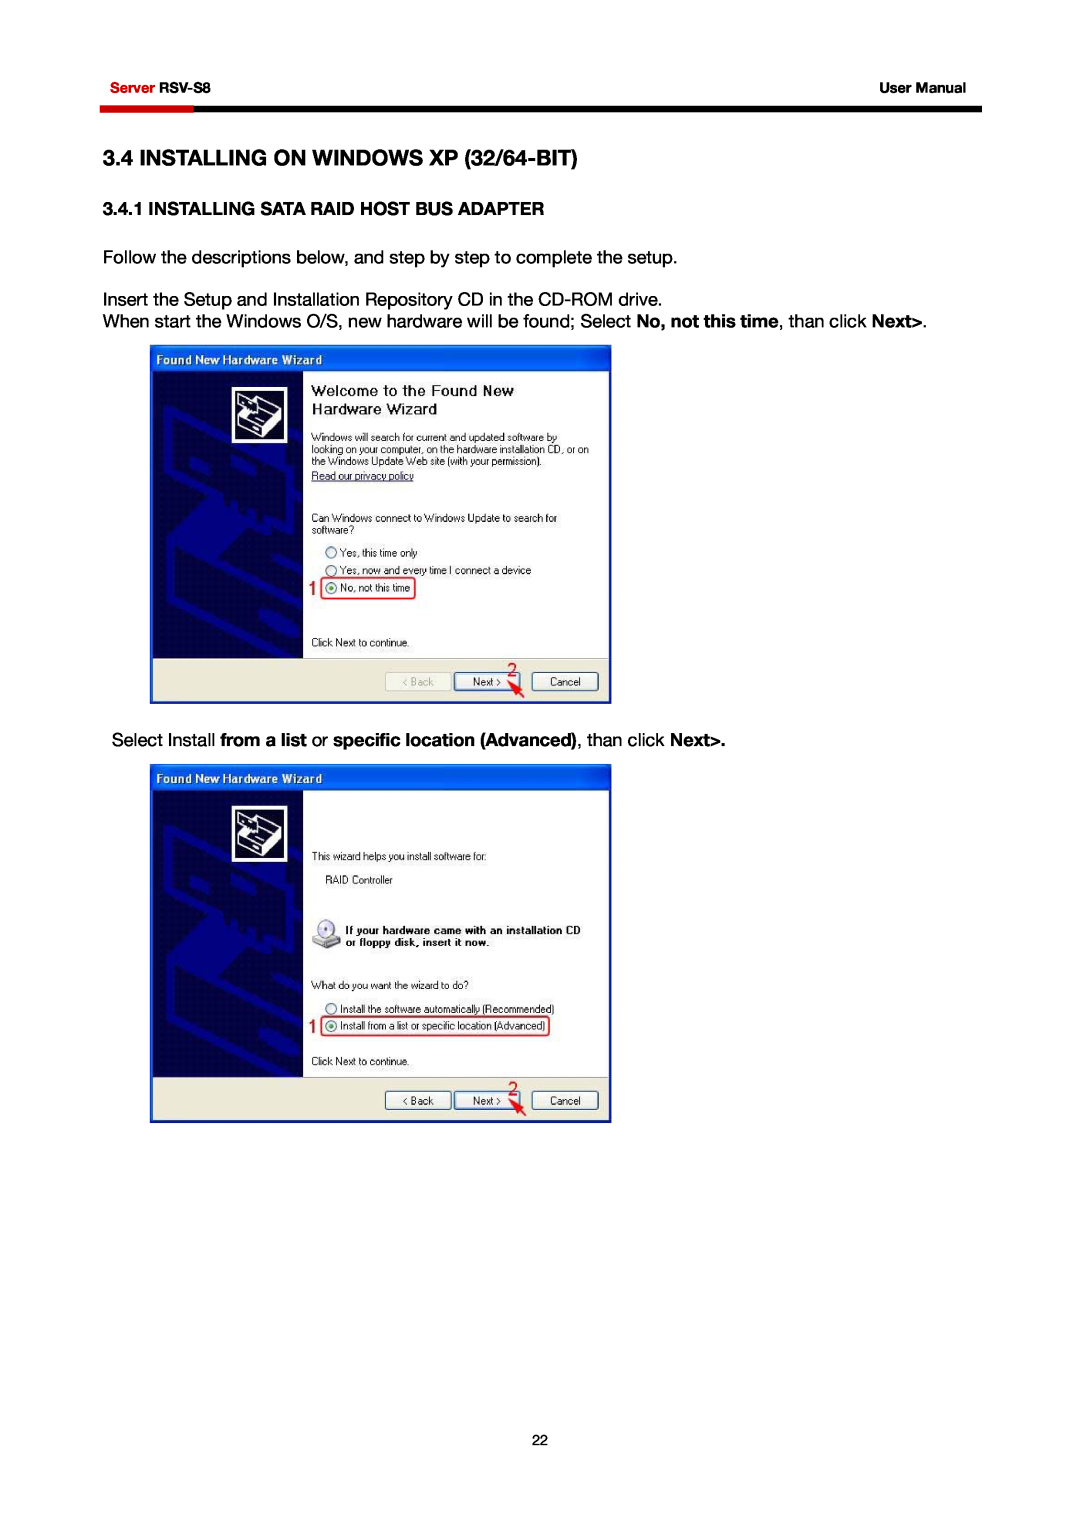 Rosewill RSV-S8 user manual INSTALLING ON WINDOWS XP 32/64-BIT, Installing Sata Raid Host Bus Adapter 